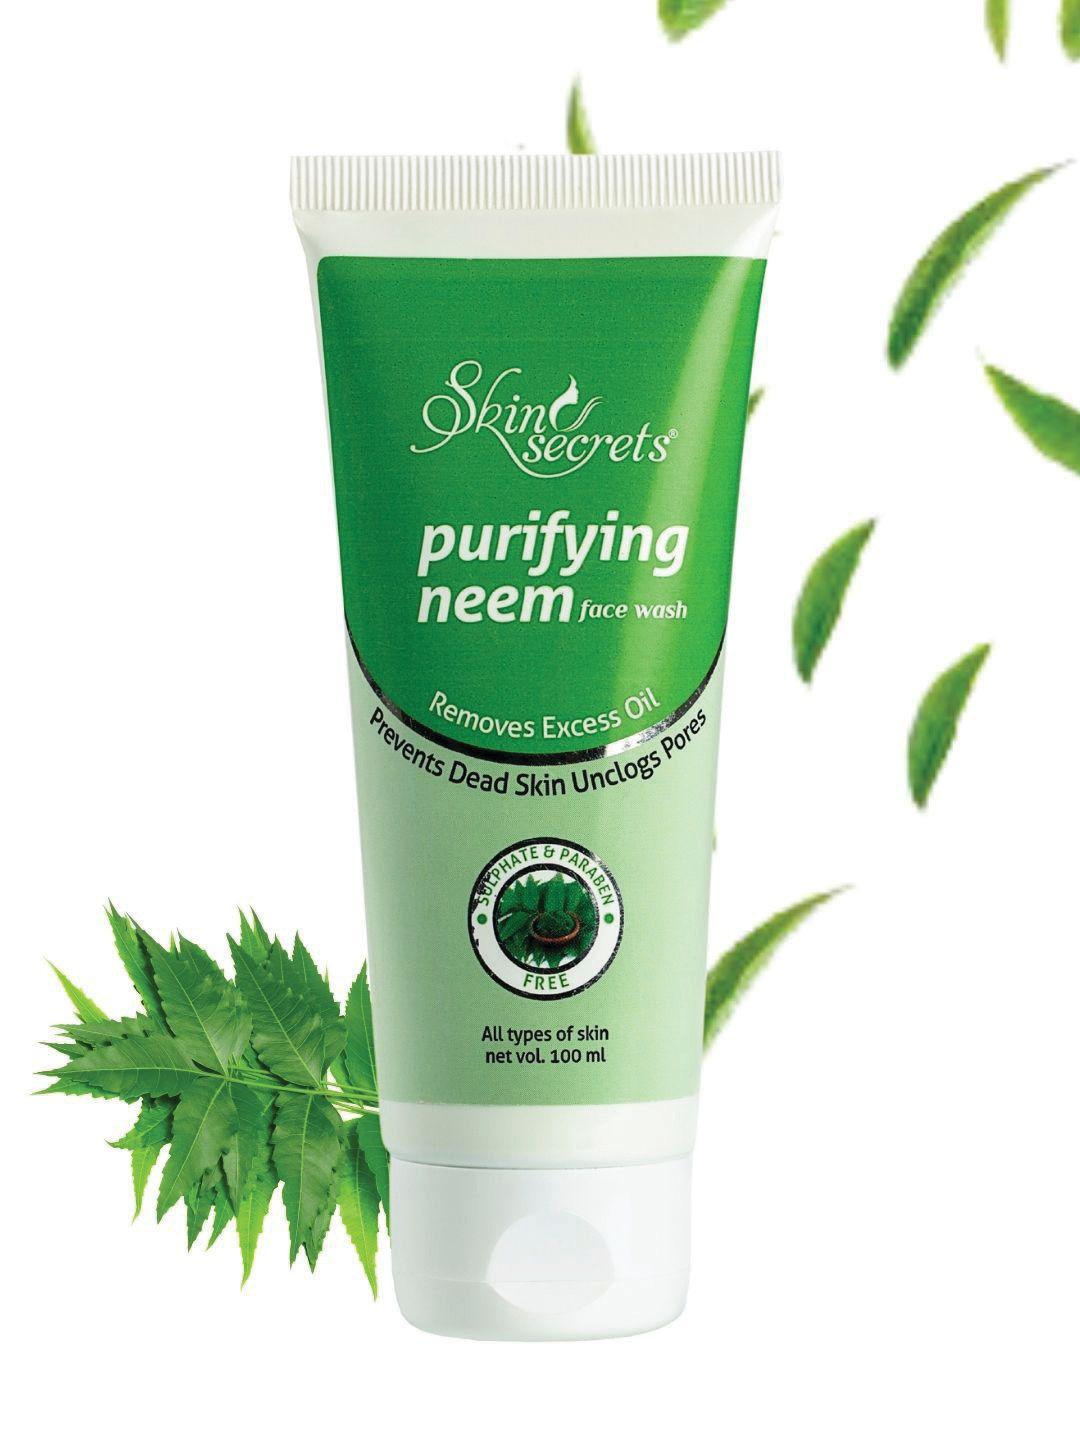 skin secrets purifying neem face wash